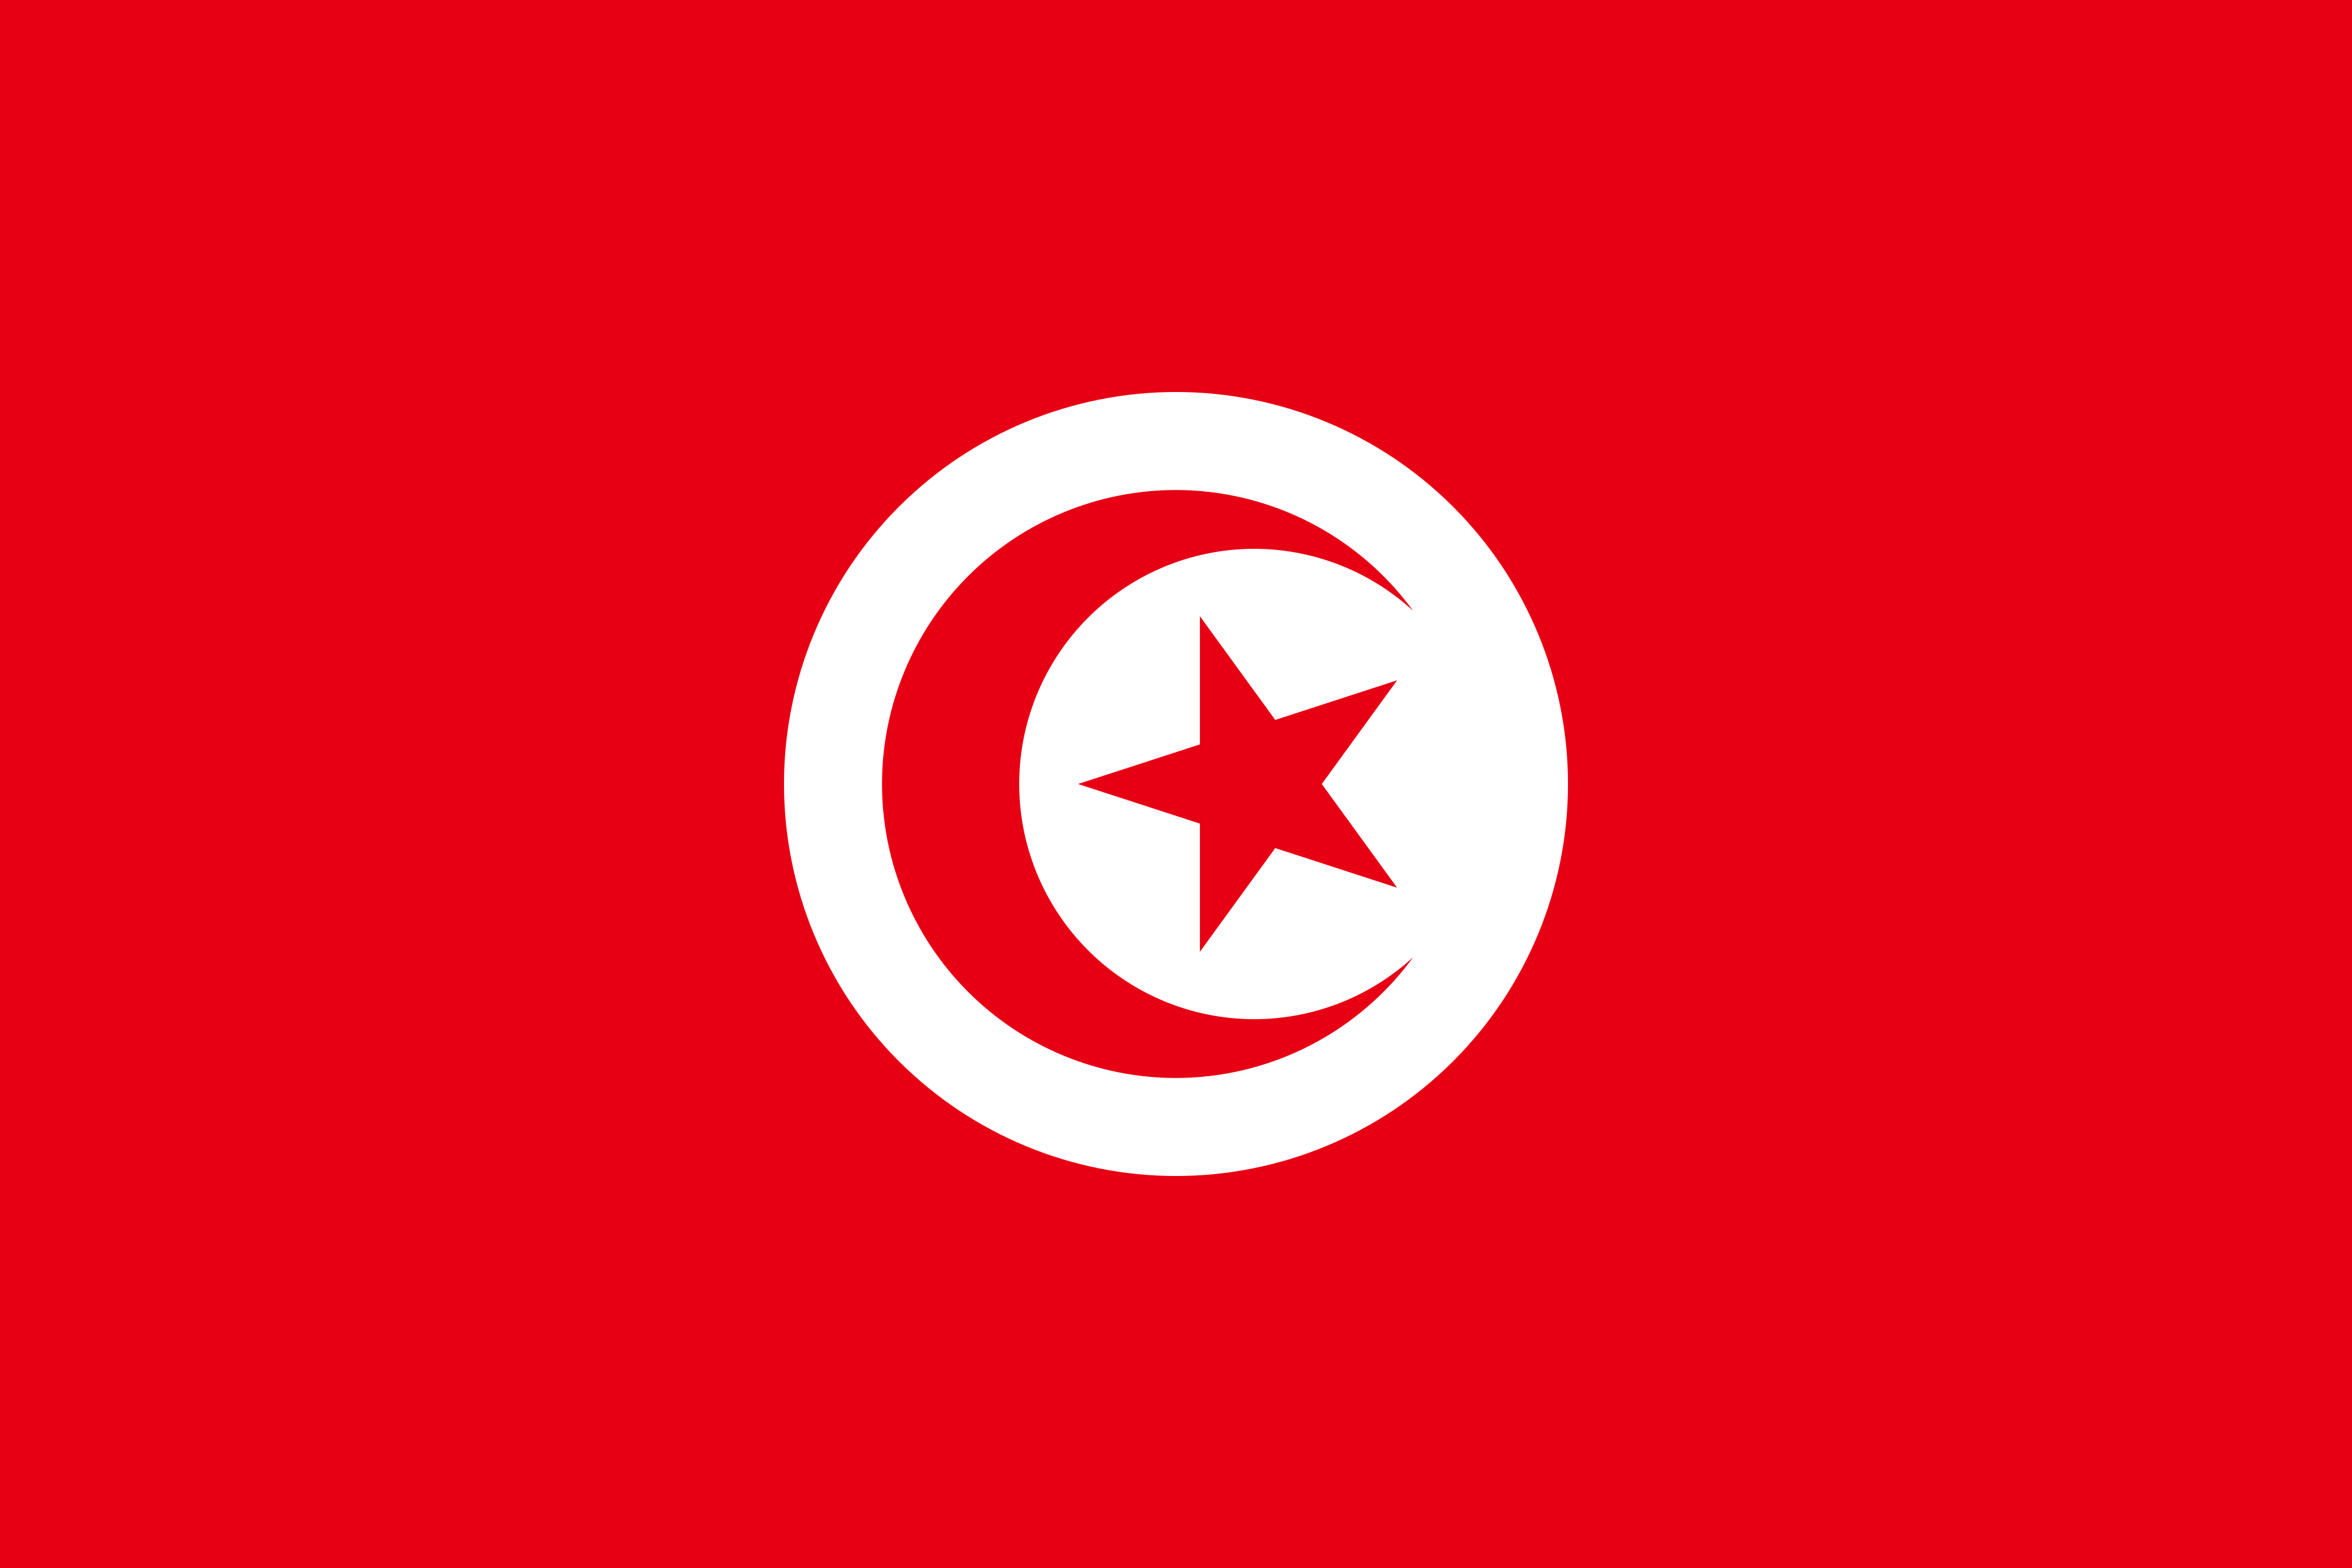 Tunisia Flag Vector - Free Download